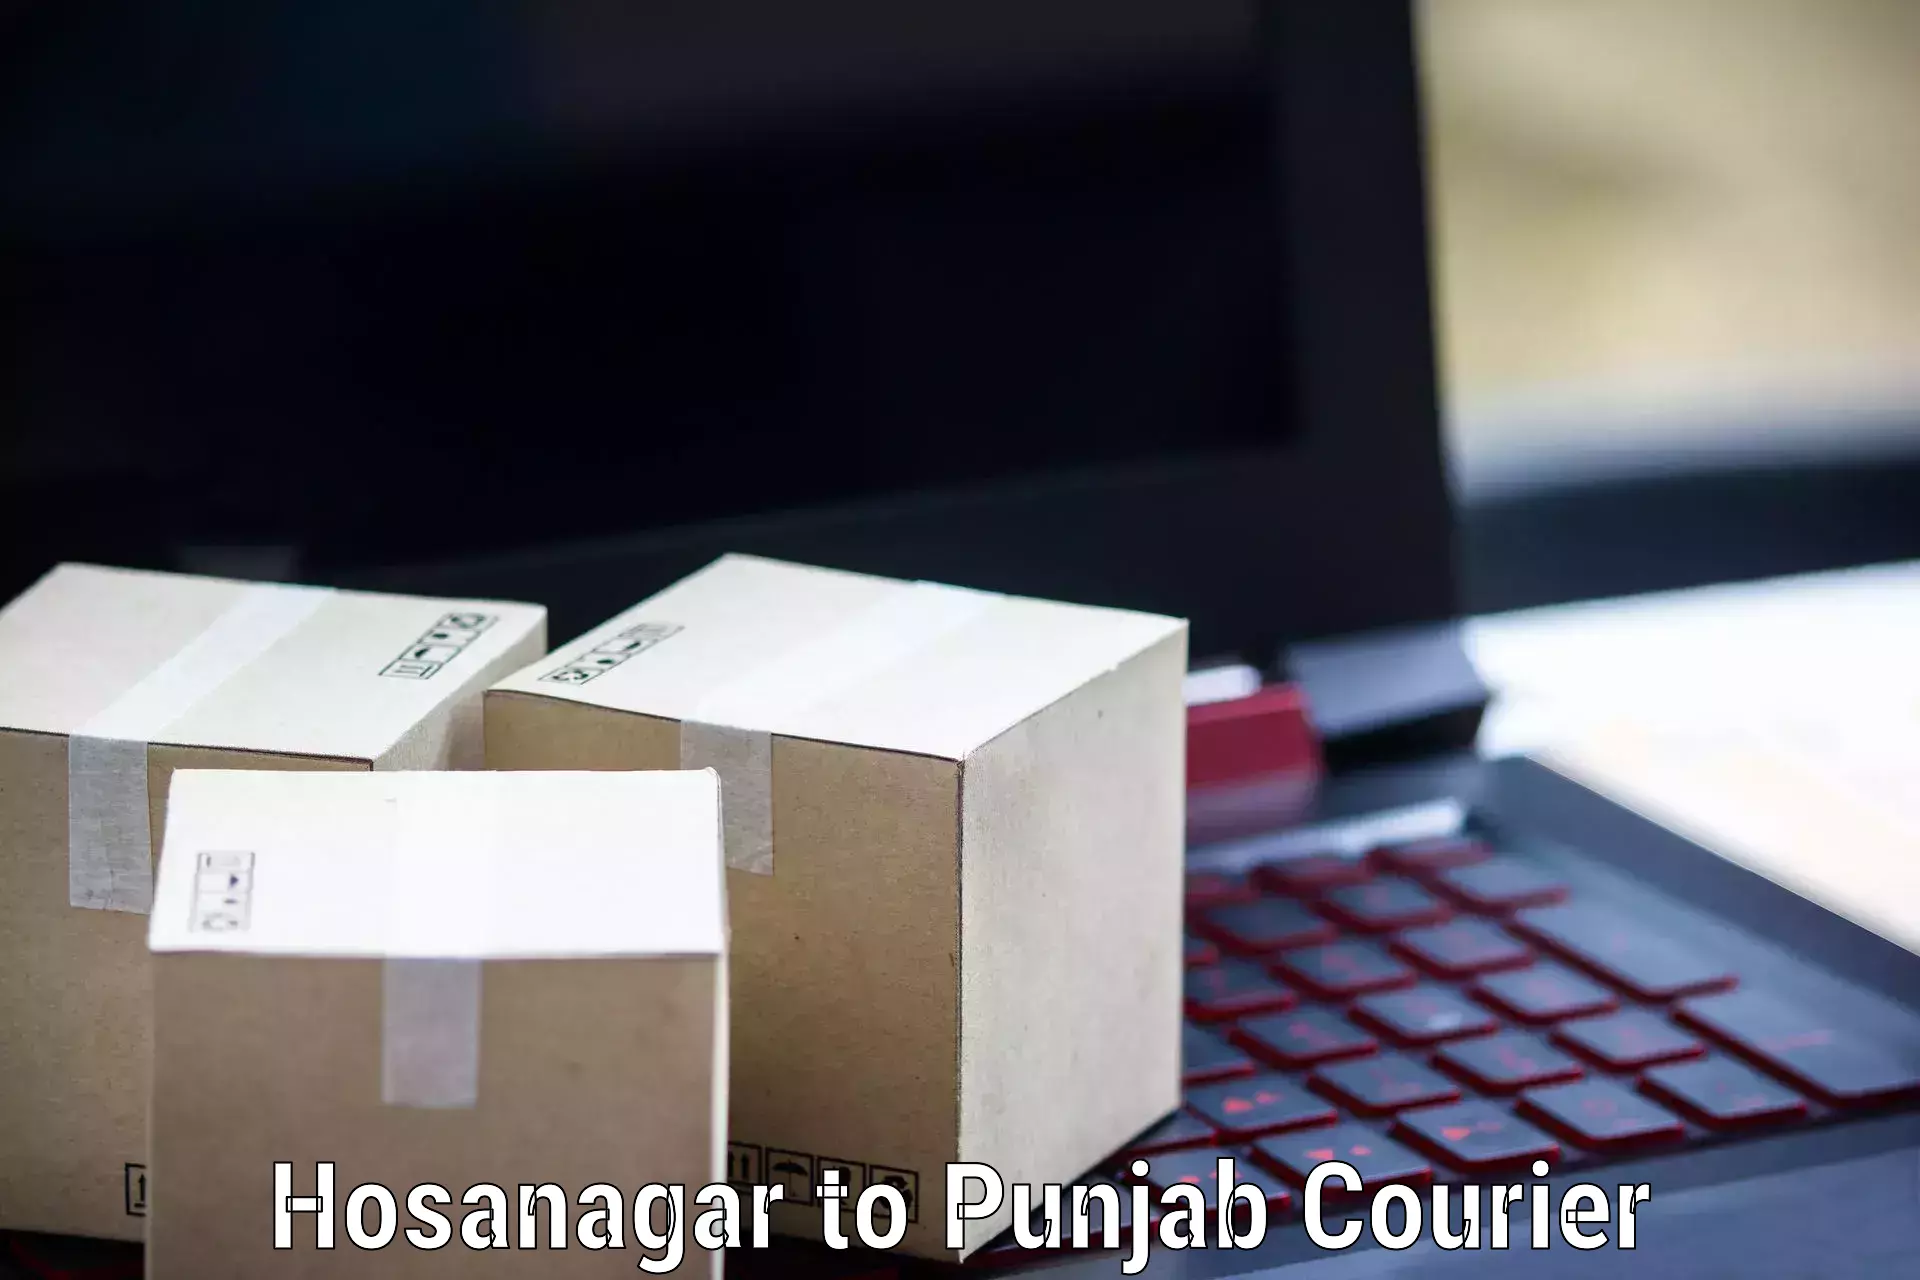 State-of-the-art courier technology Hosanagar to Talwara